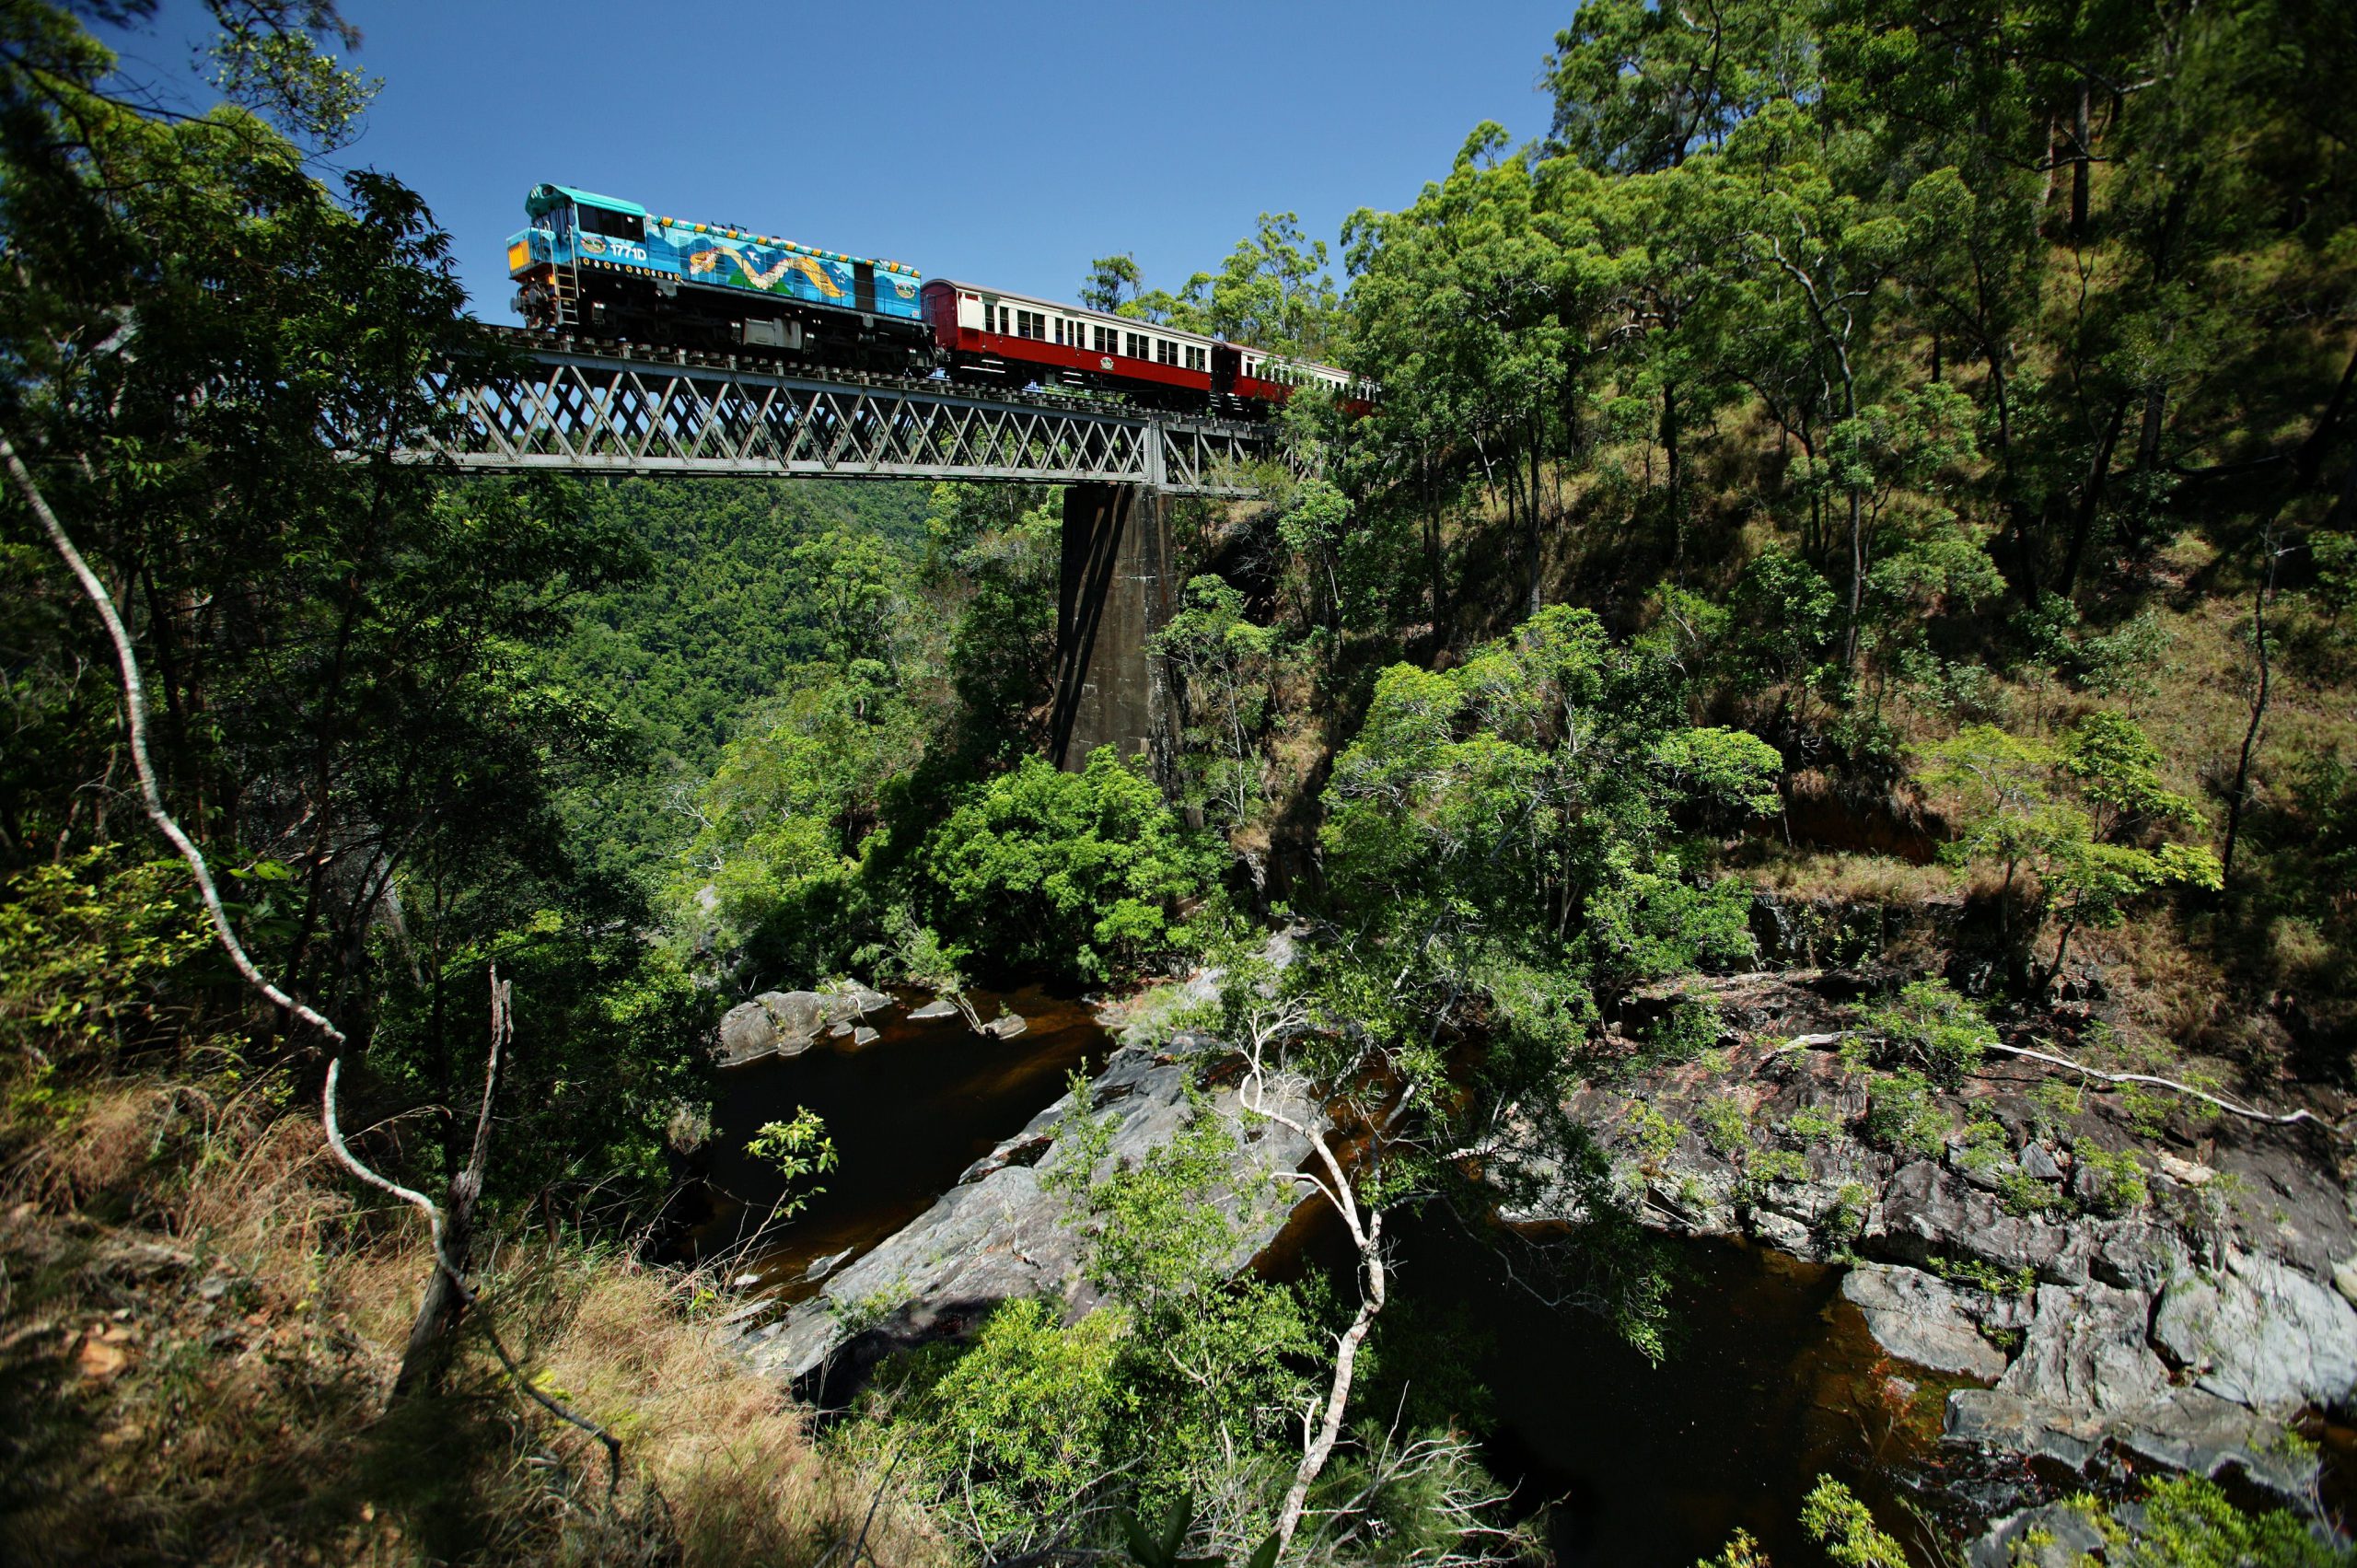 Kuranda Scenic Railway crosses over an old wooden bridge at Surprise Creek near Cairns